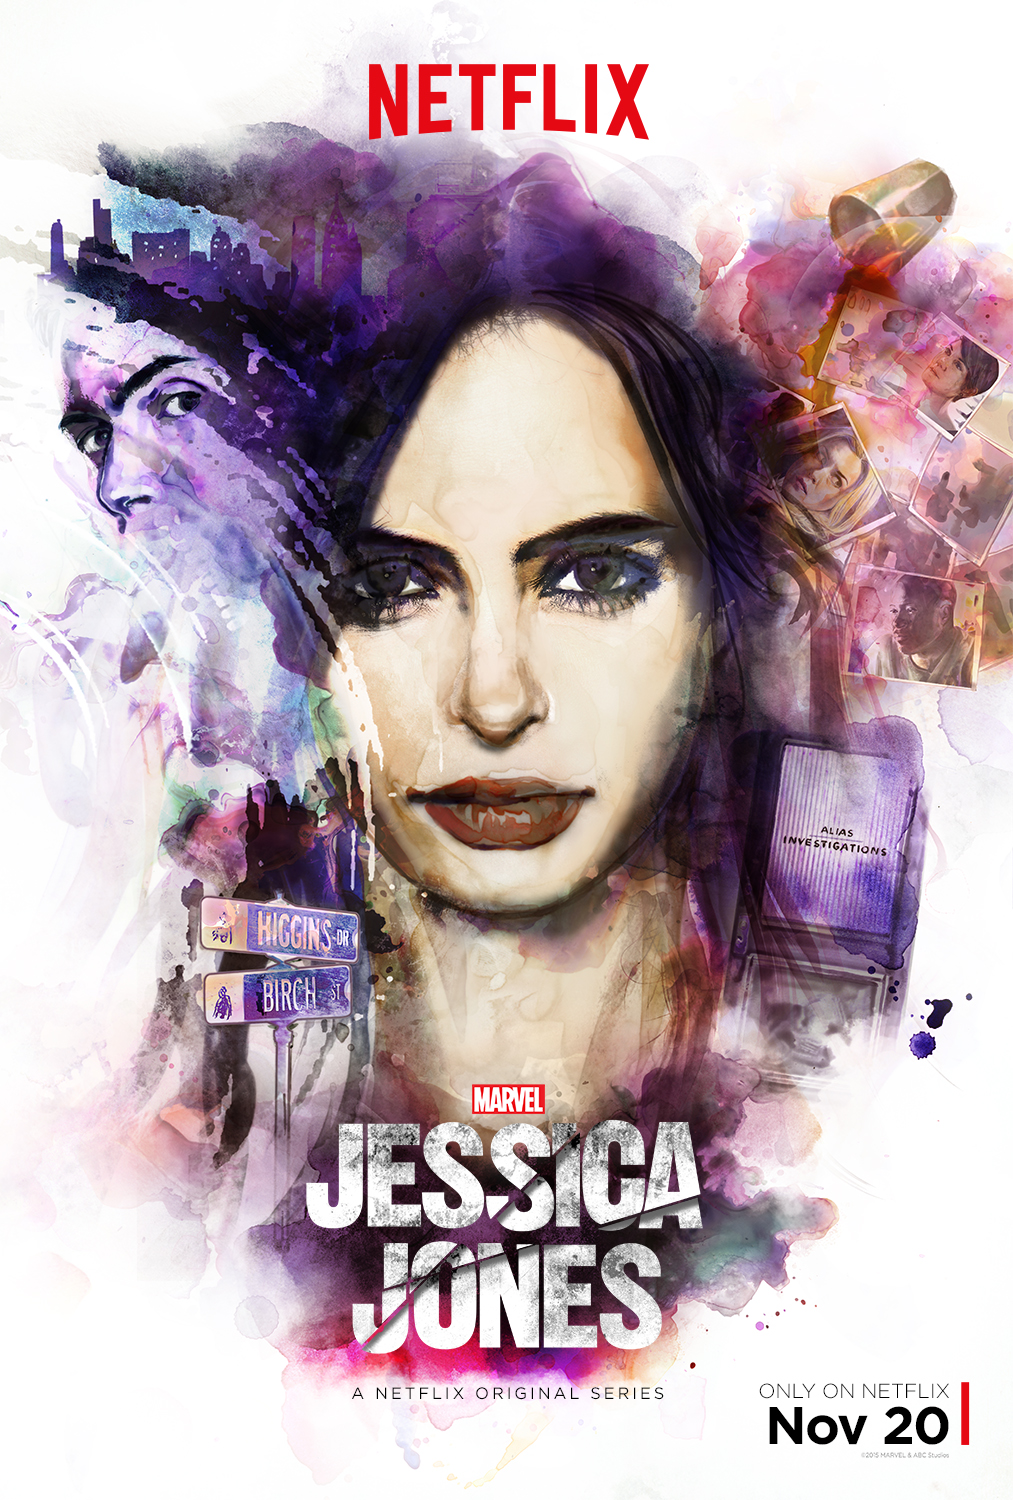 Marvel's Jessica Jones on Netflix